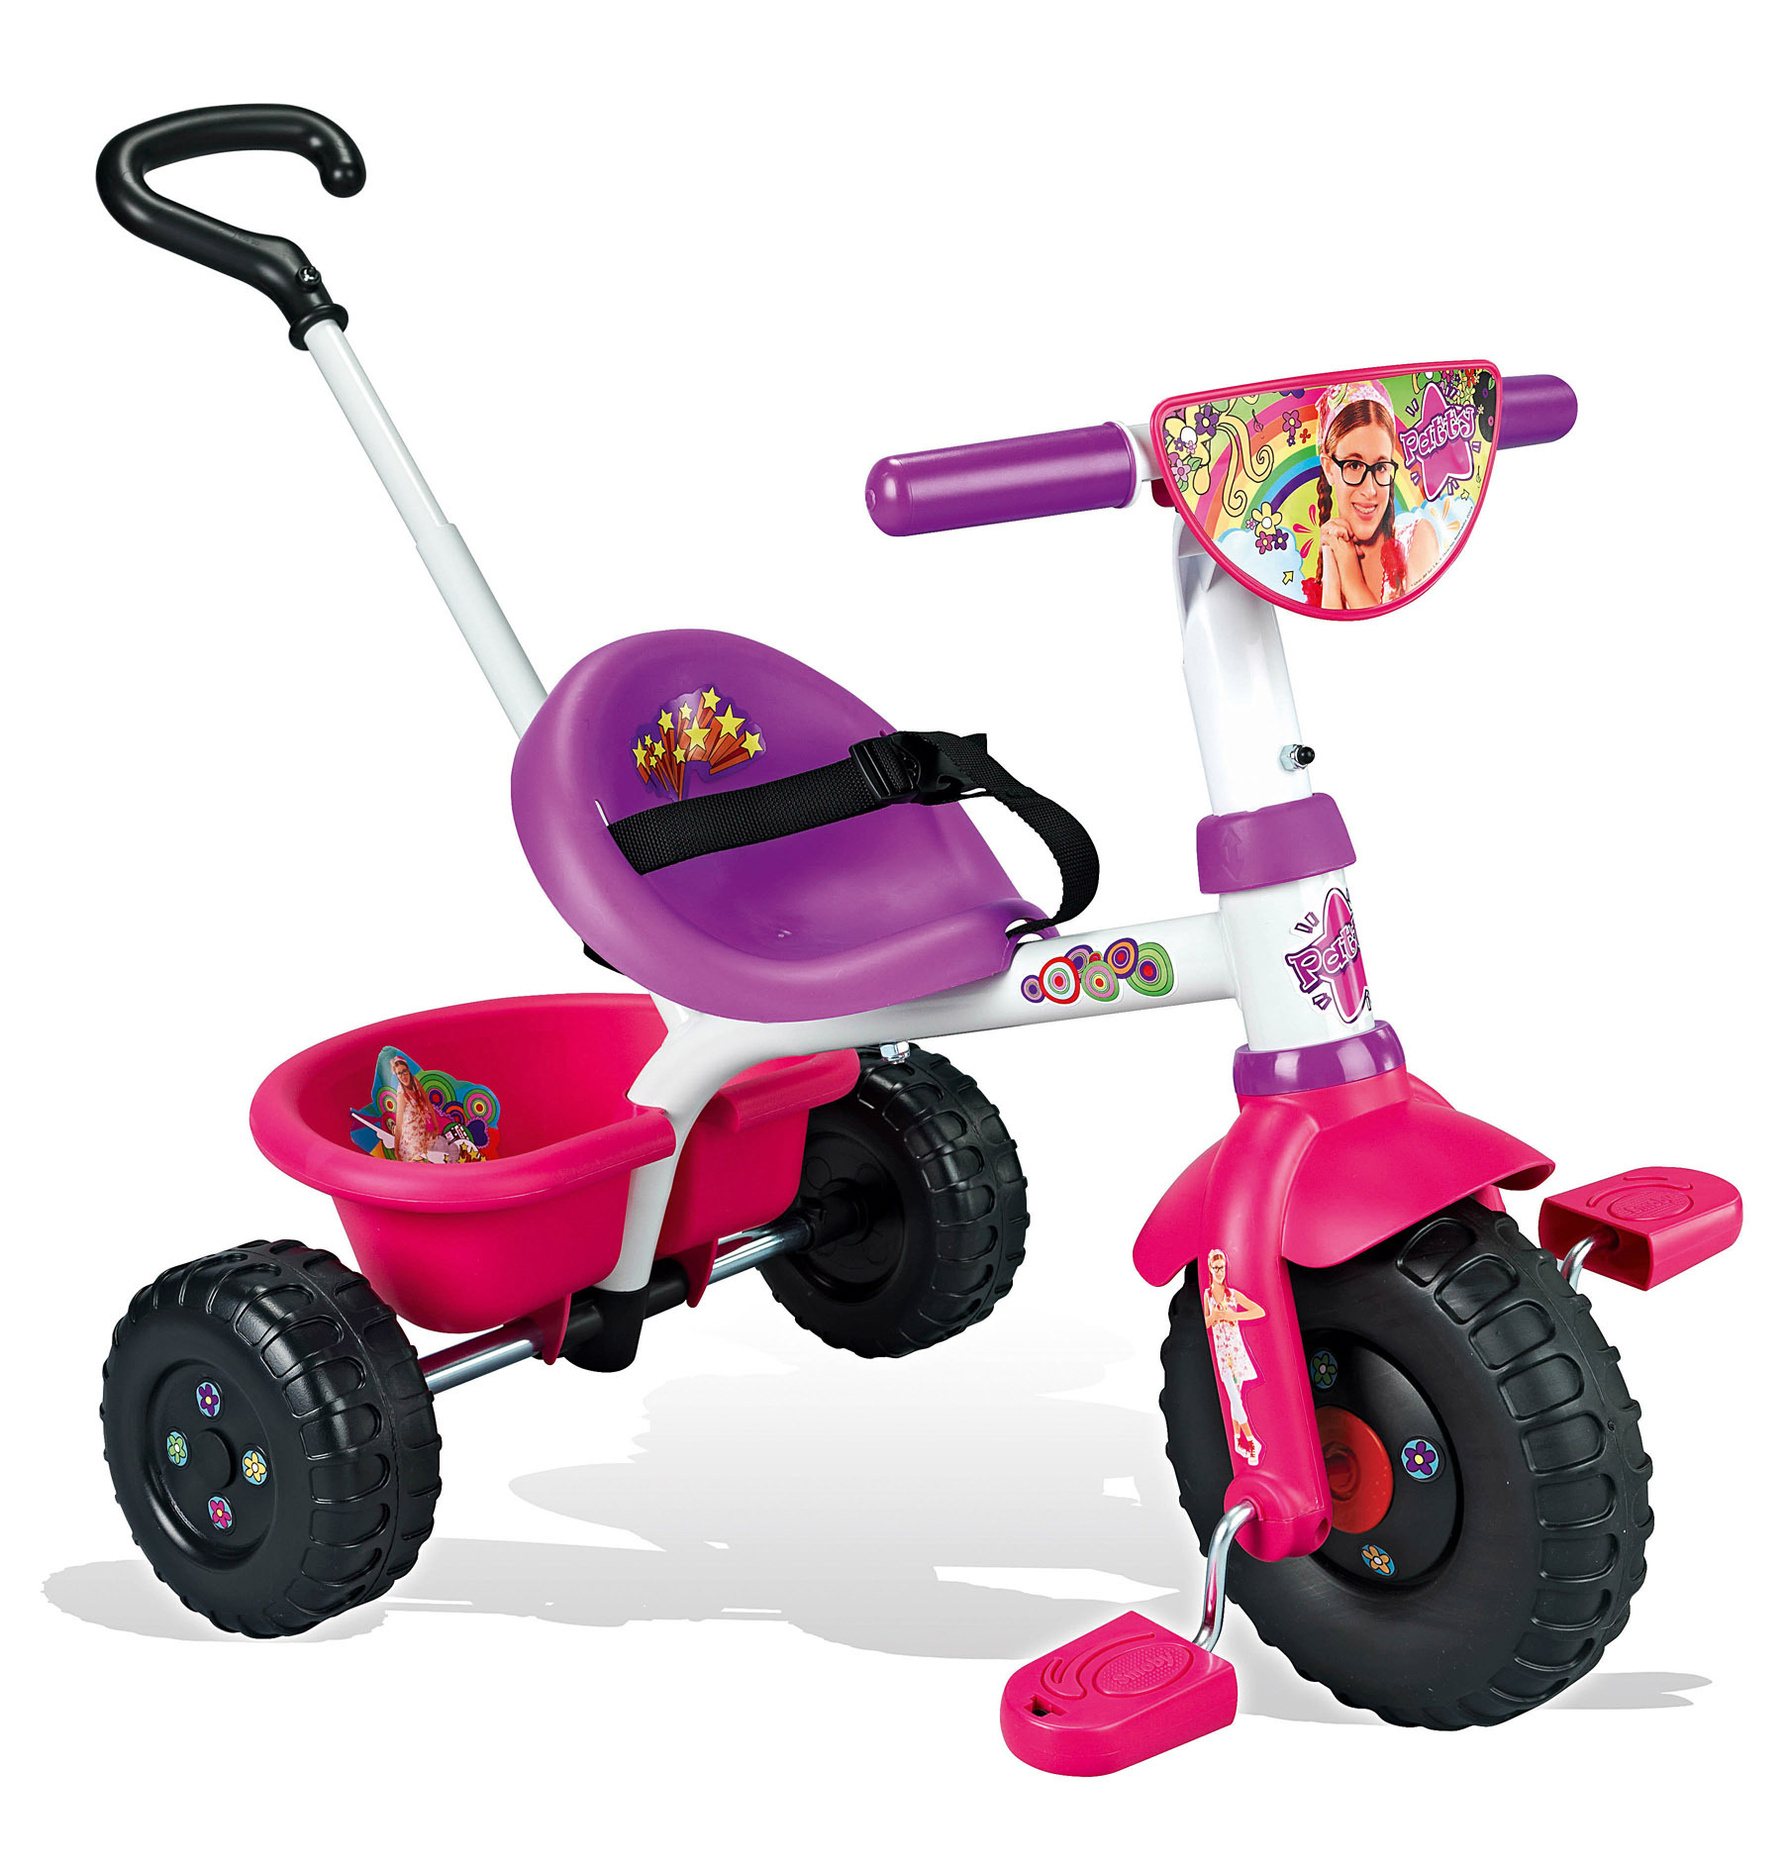 Smoby Be Fun Dreirad mit Schubstange Farbe: lila pink